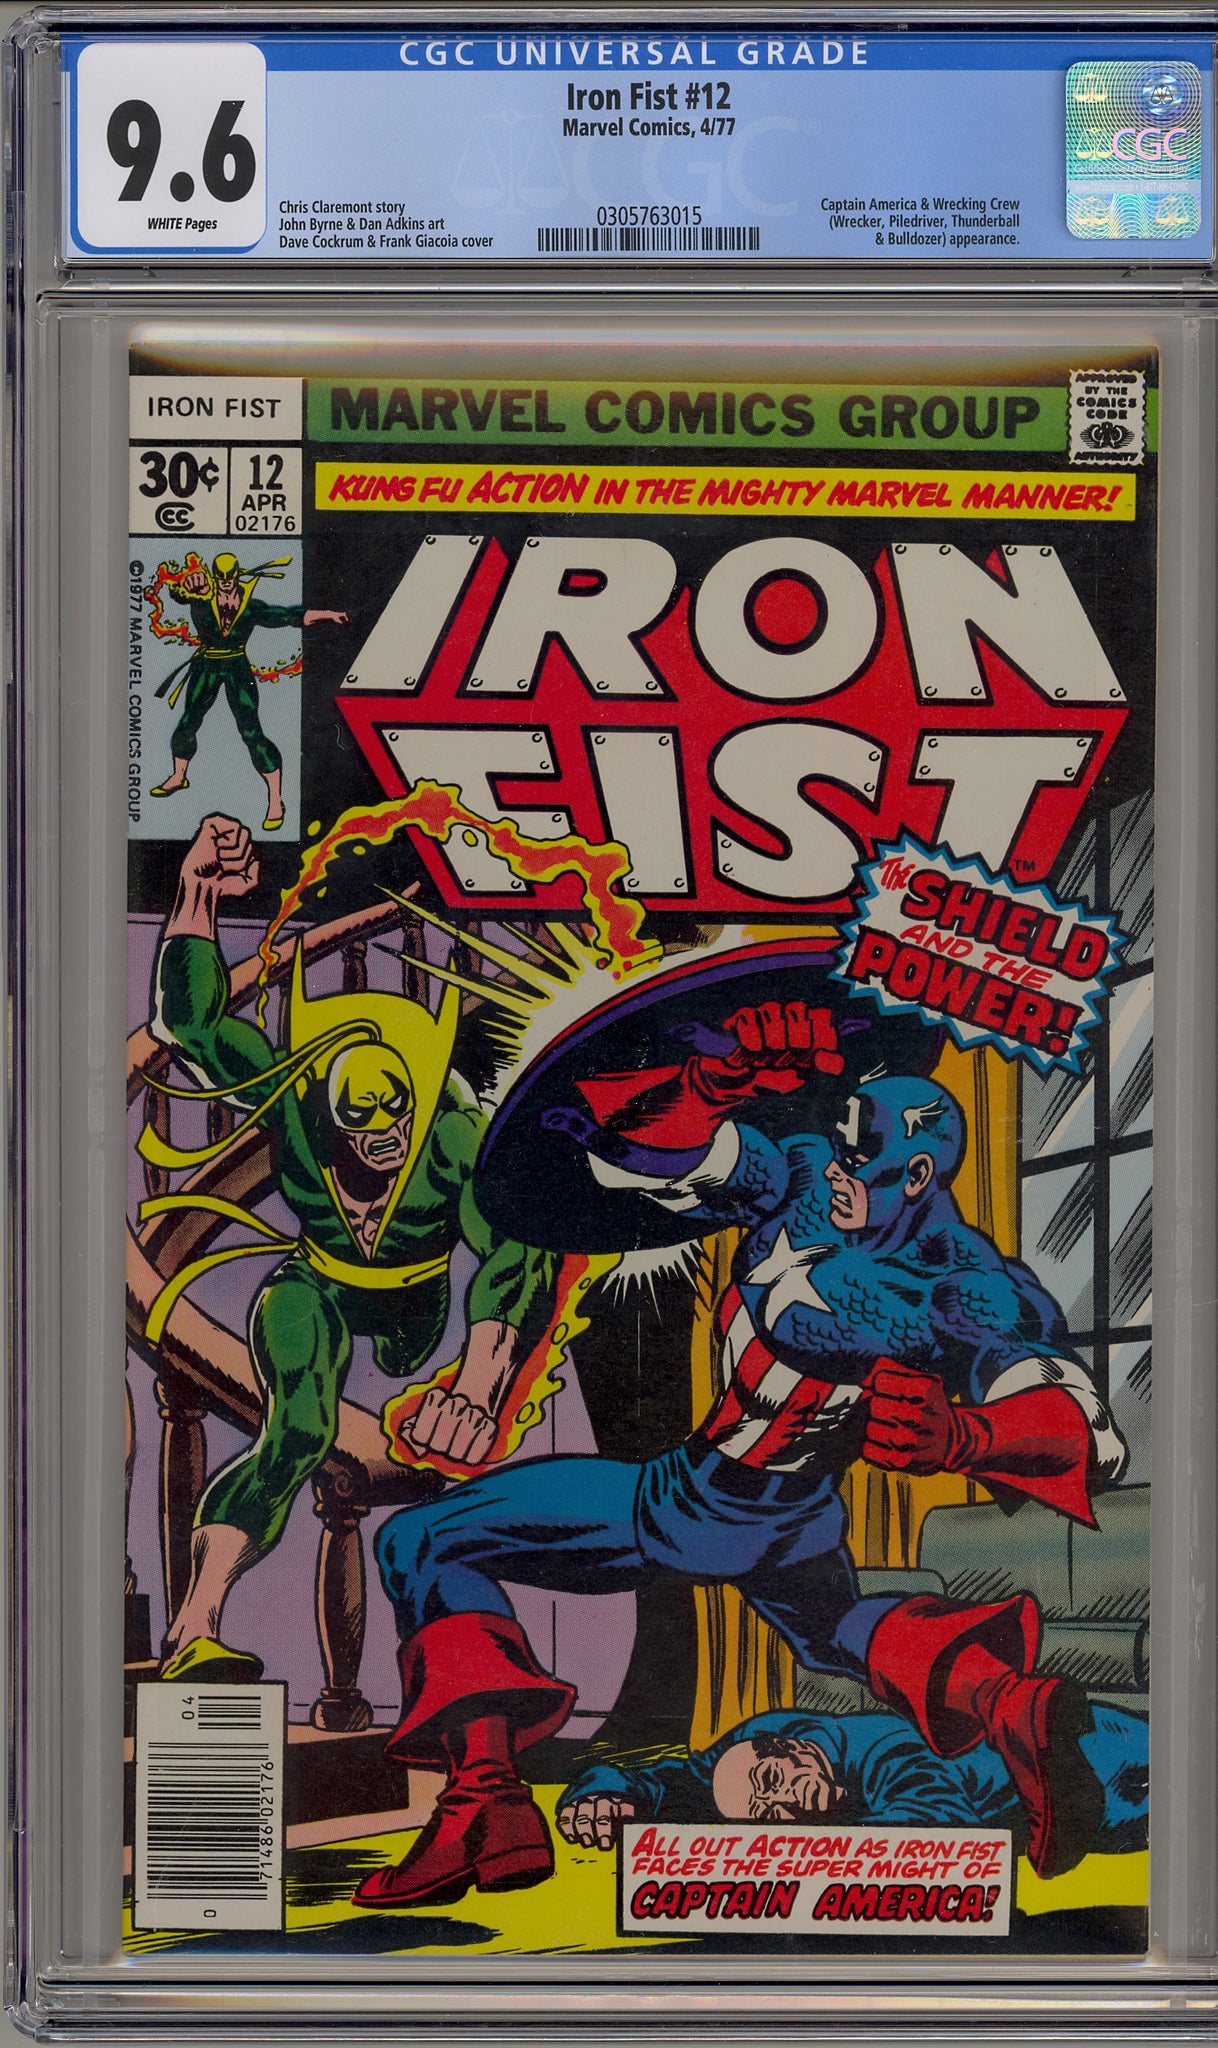 Iron Fist #12 (1977) Captain America